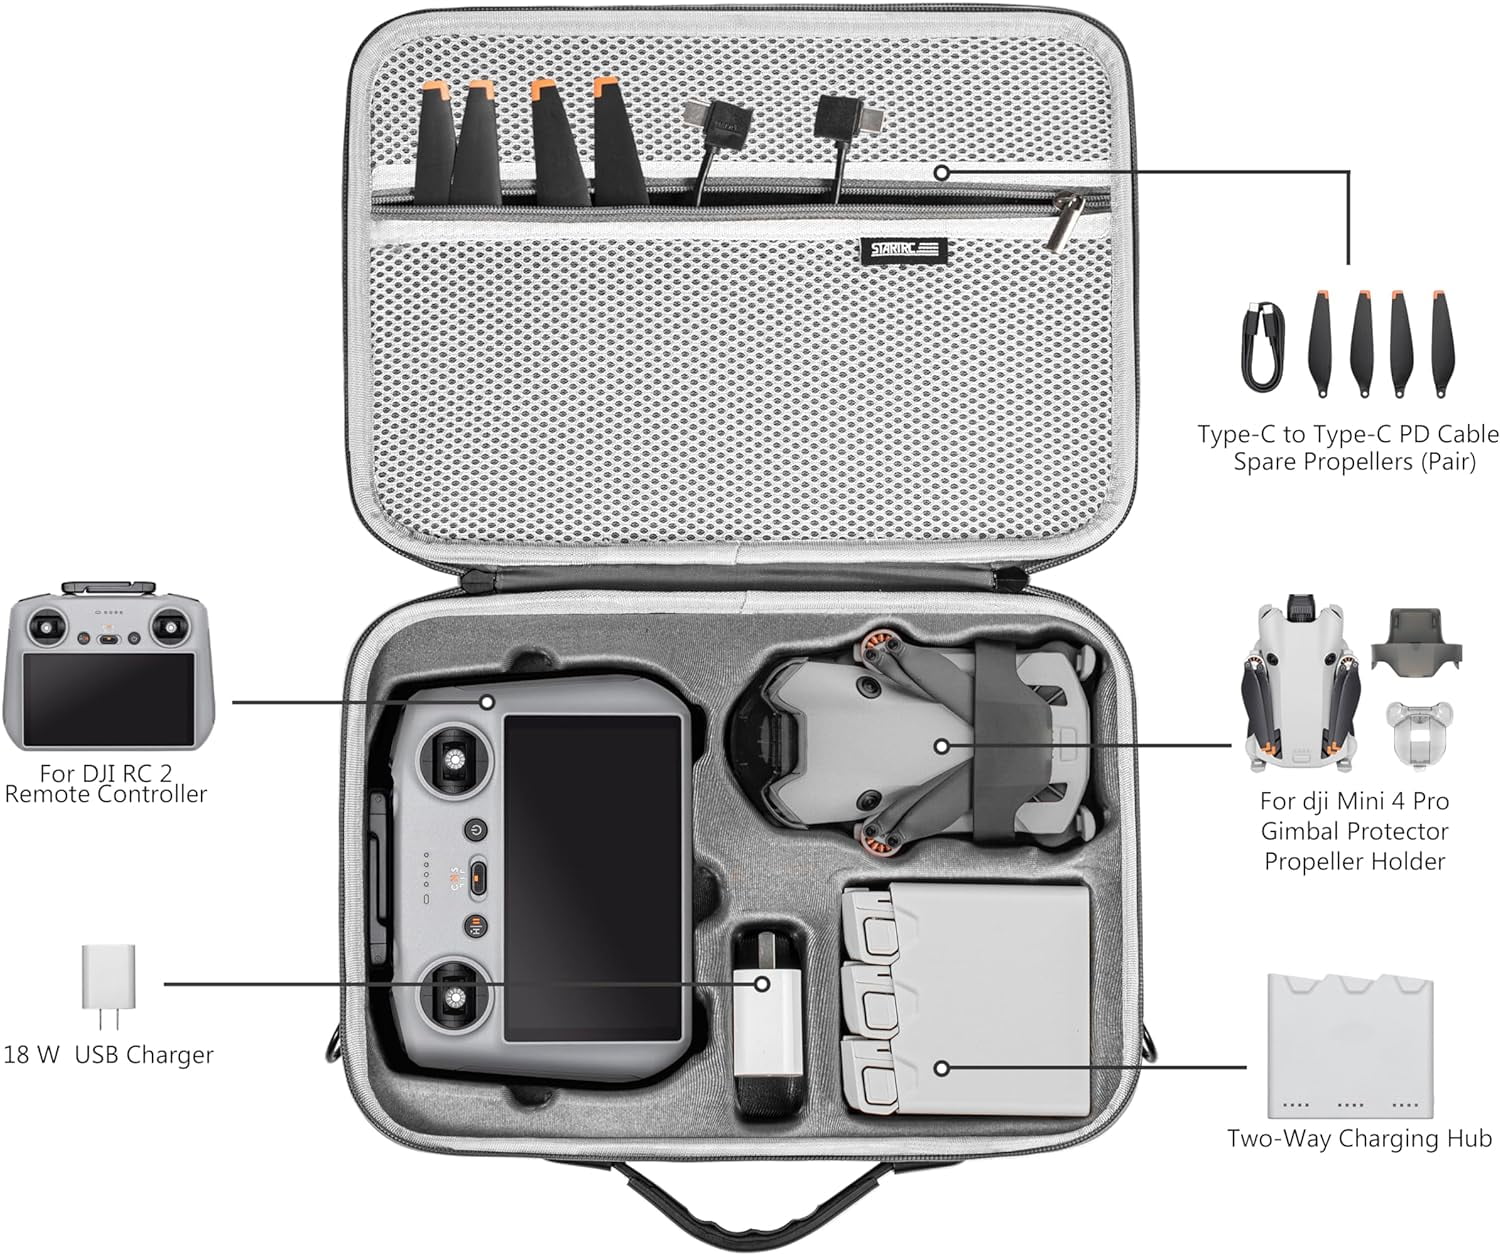 GAEKOL Carrying Case for DJI Mini 4 Pro Accessories,Portable